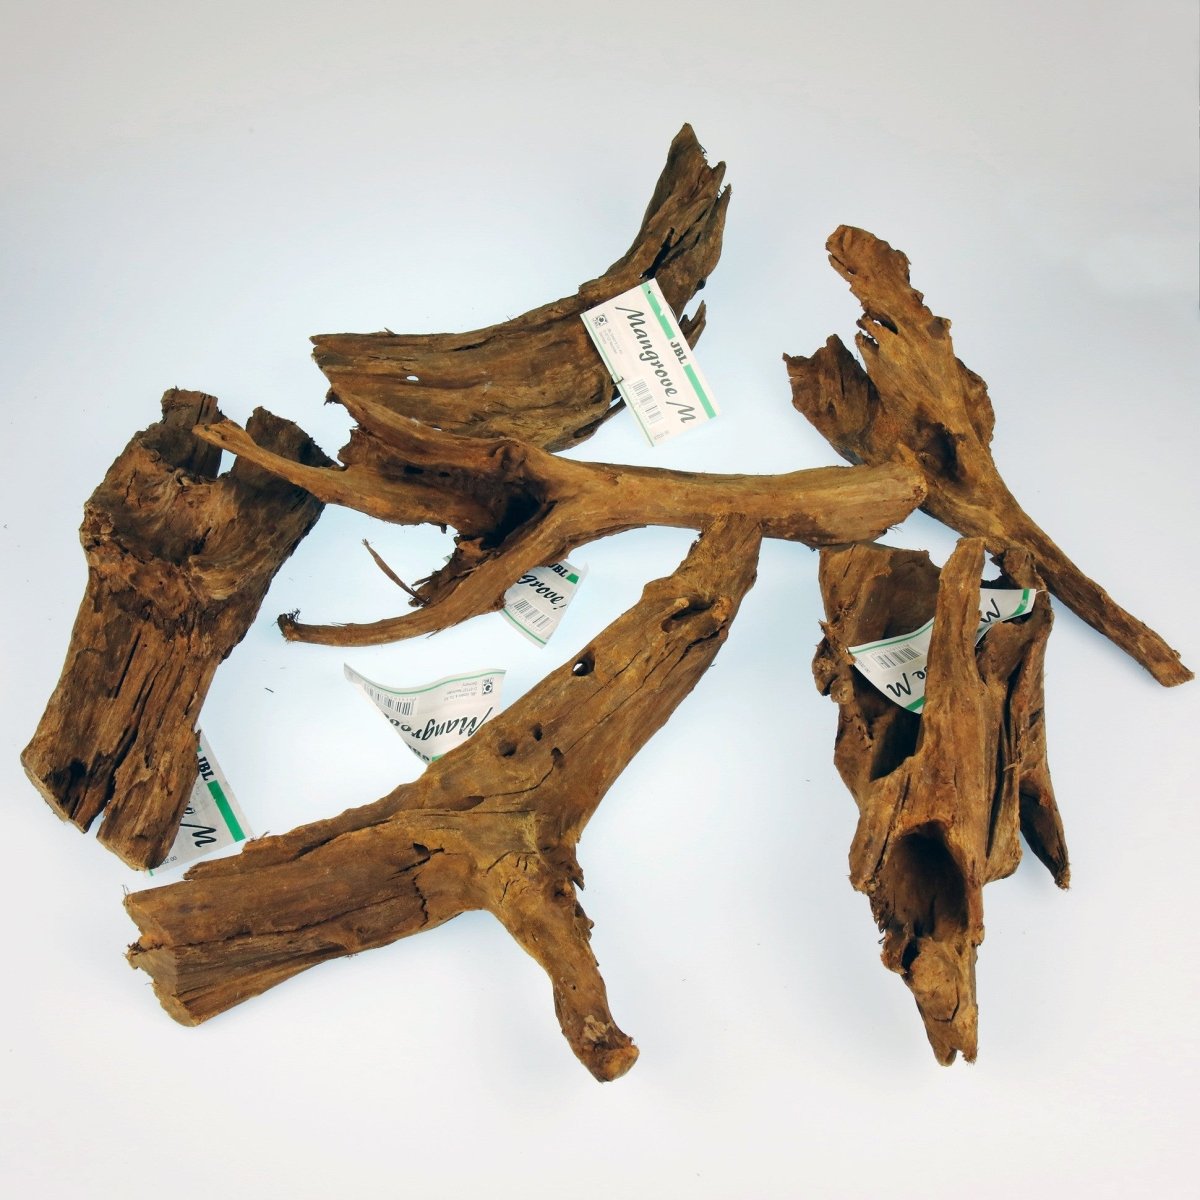 JBL Mangrovenwurzel - Mangrovenholz-Wurzel für Aquarien 